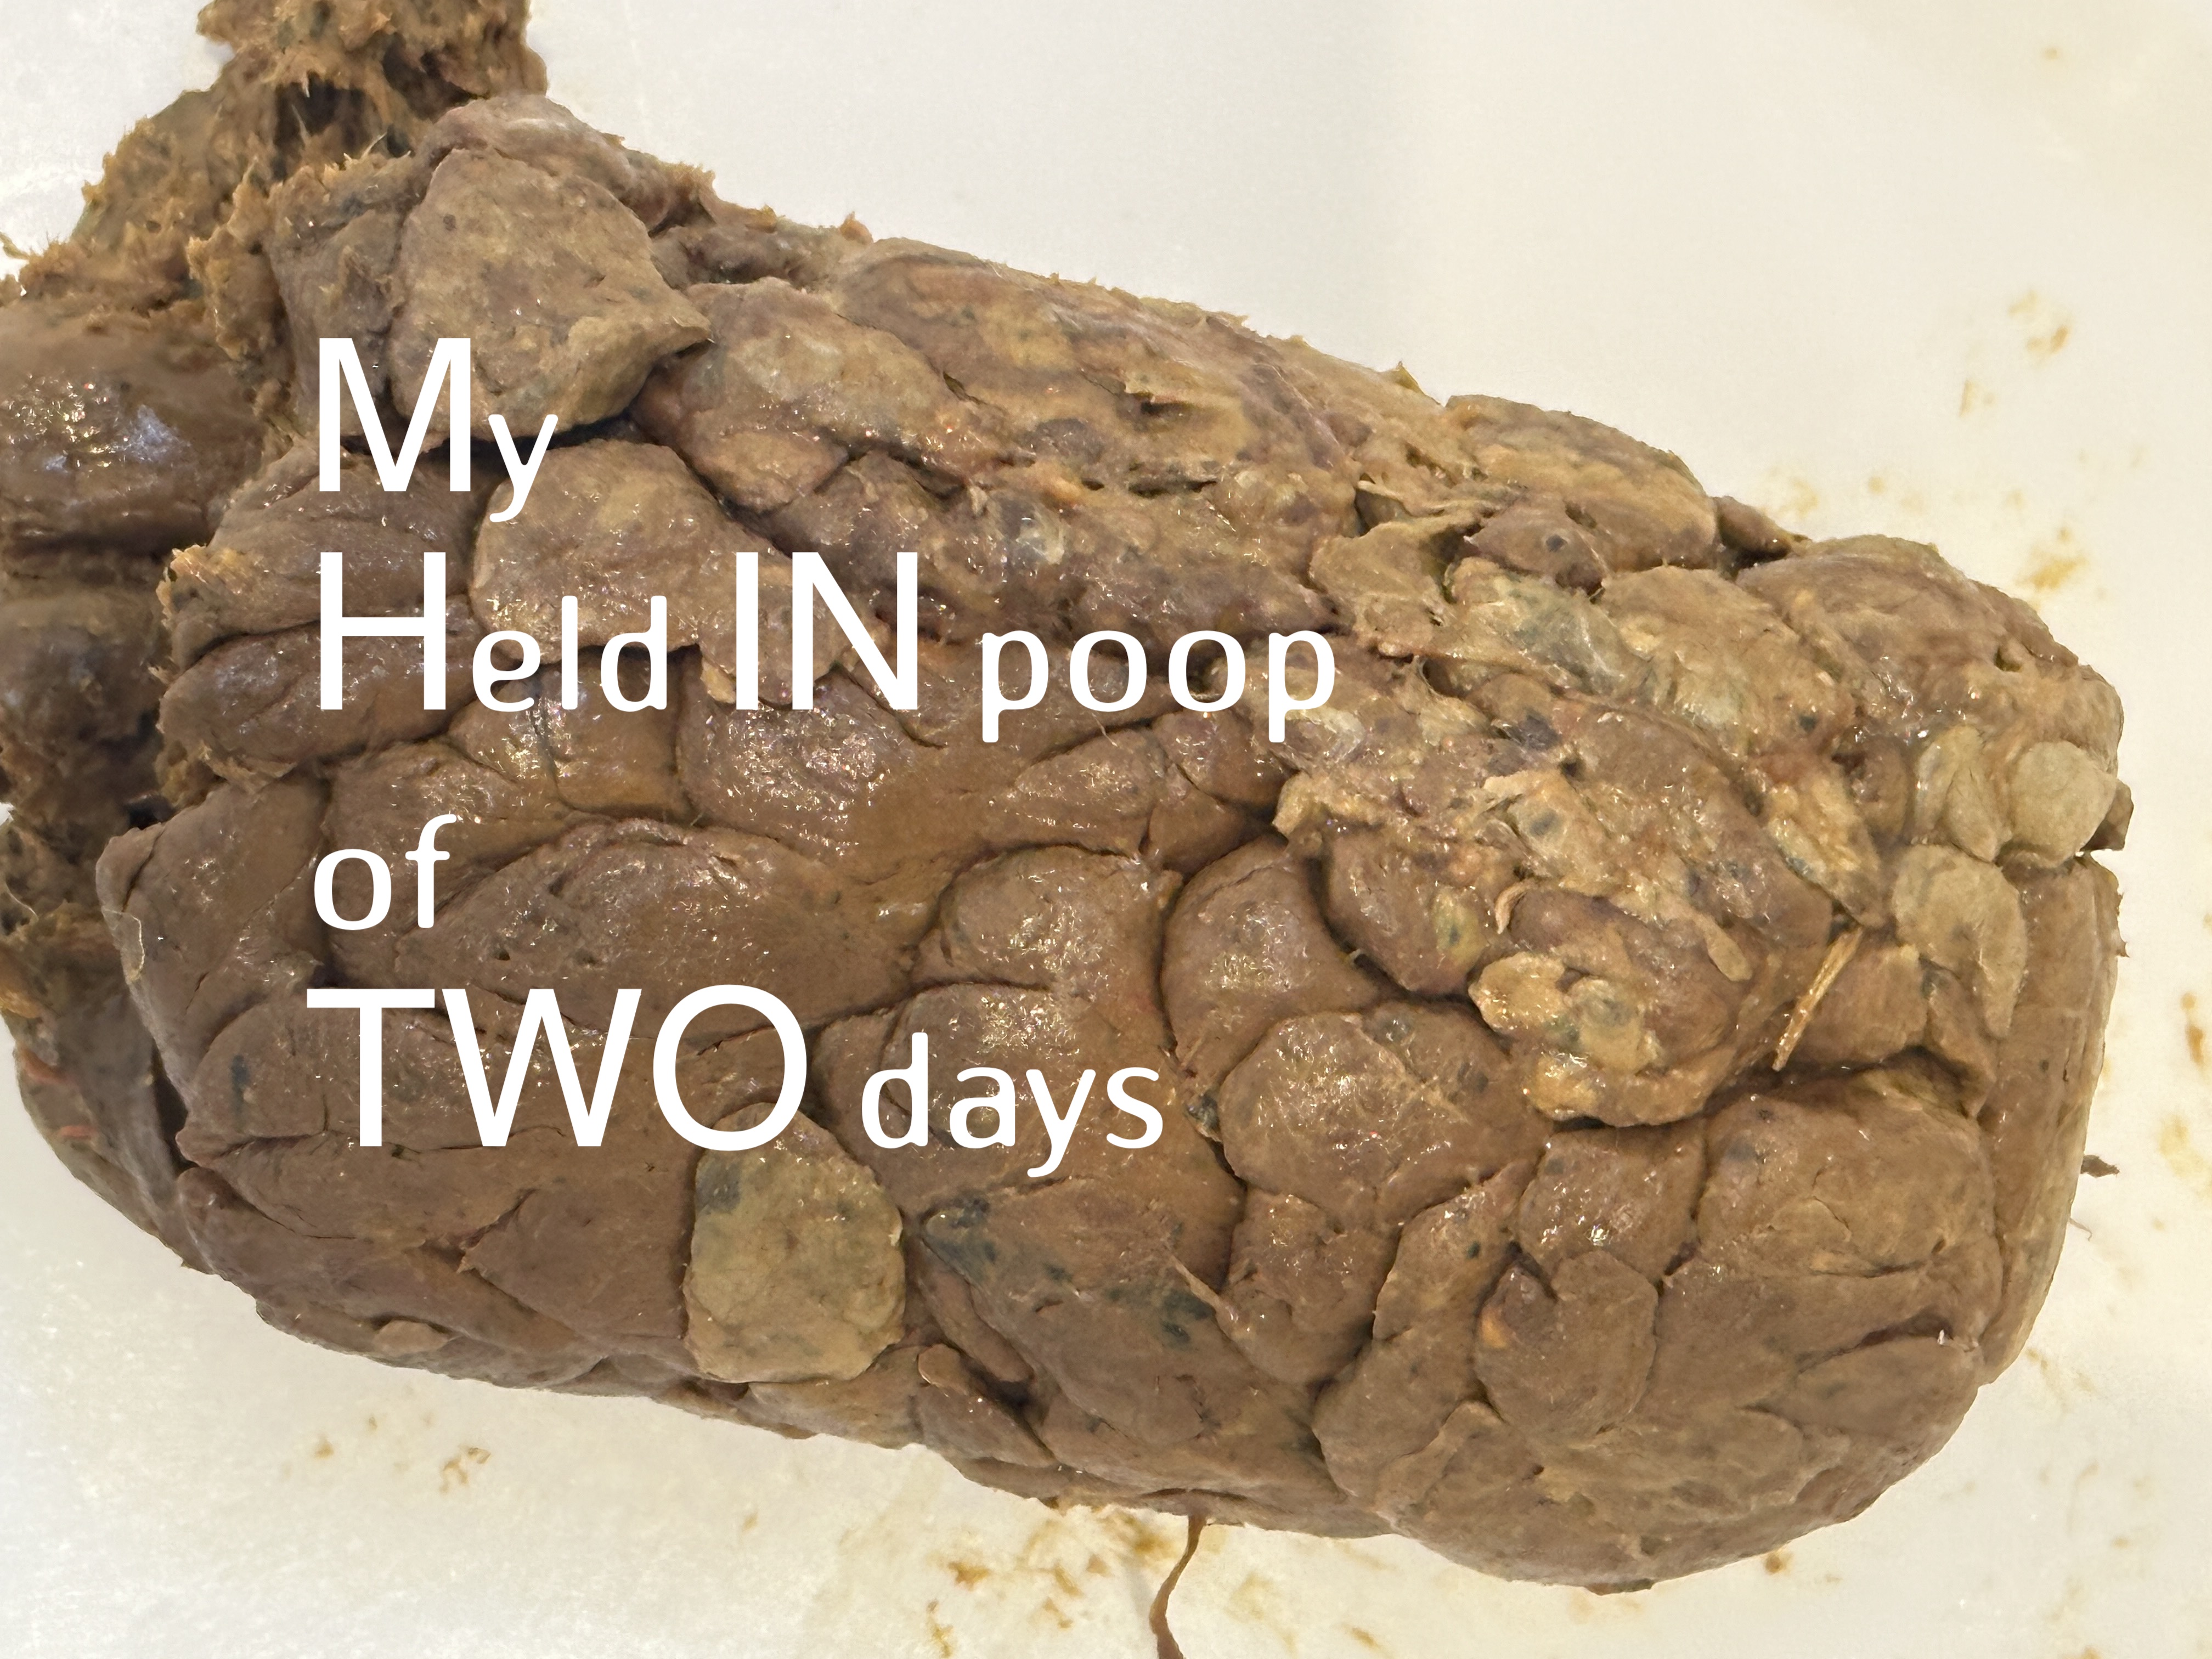 My held in poop of two days